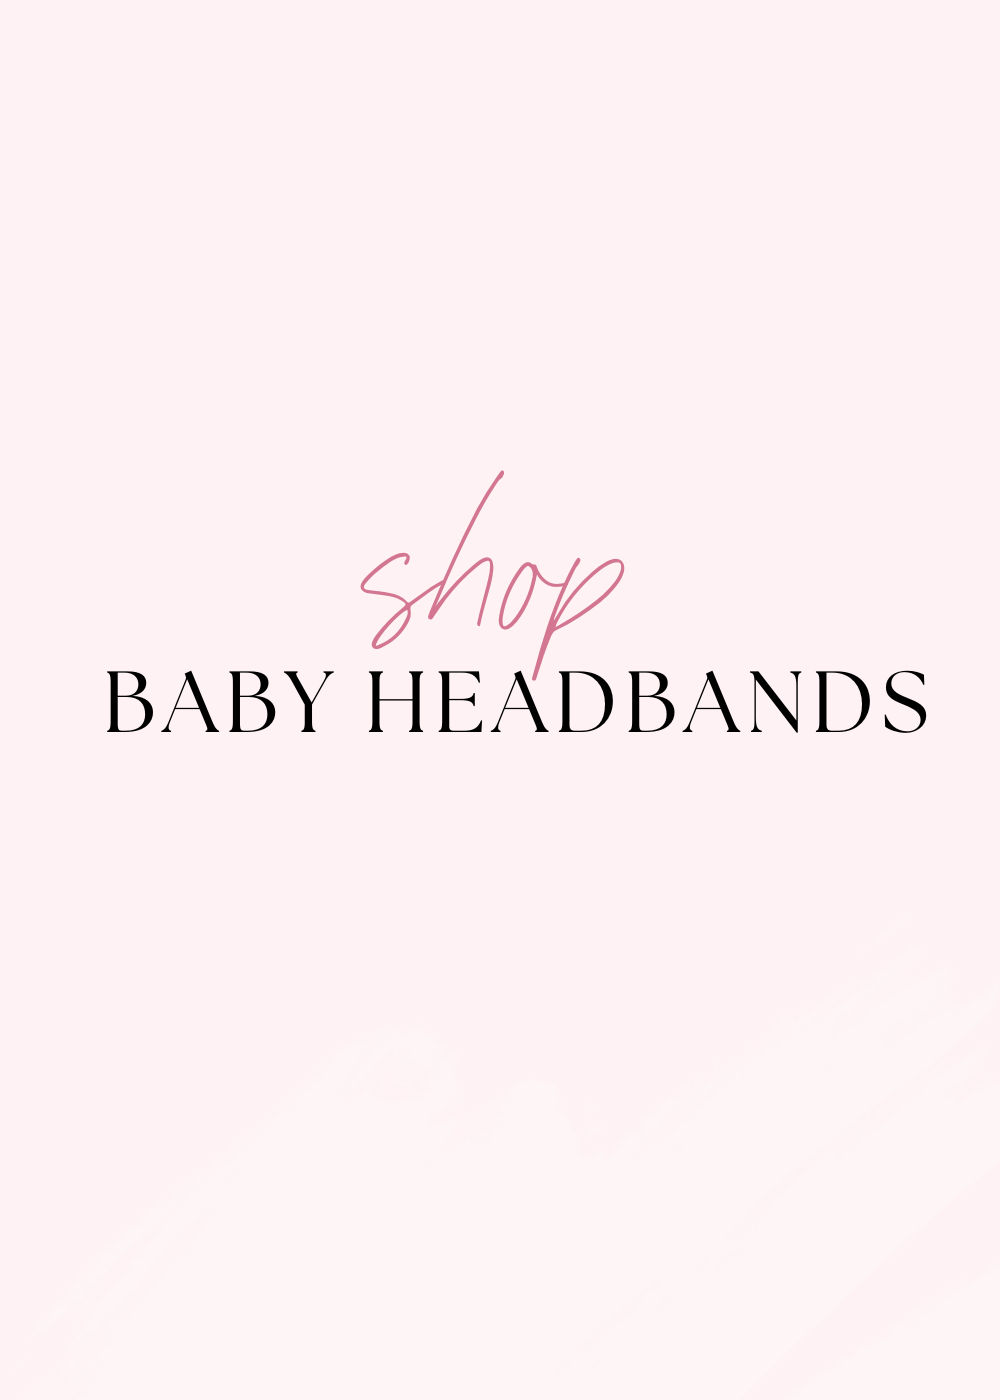 Baby Headbands